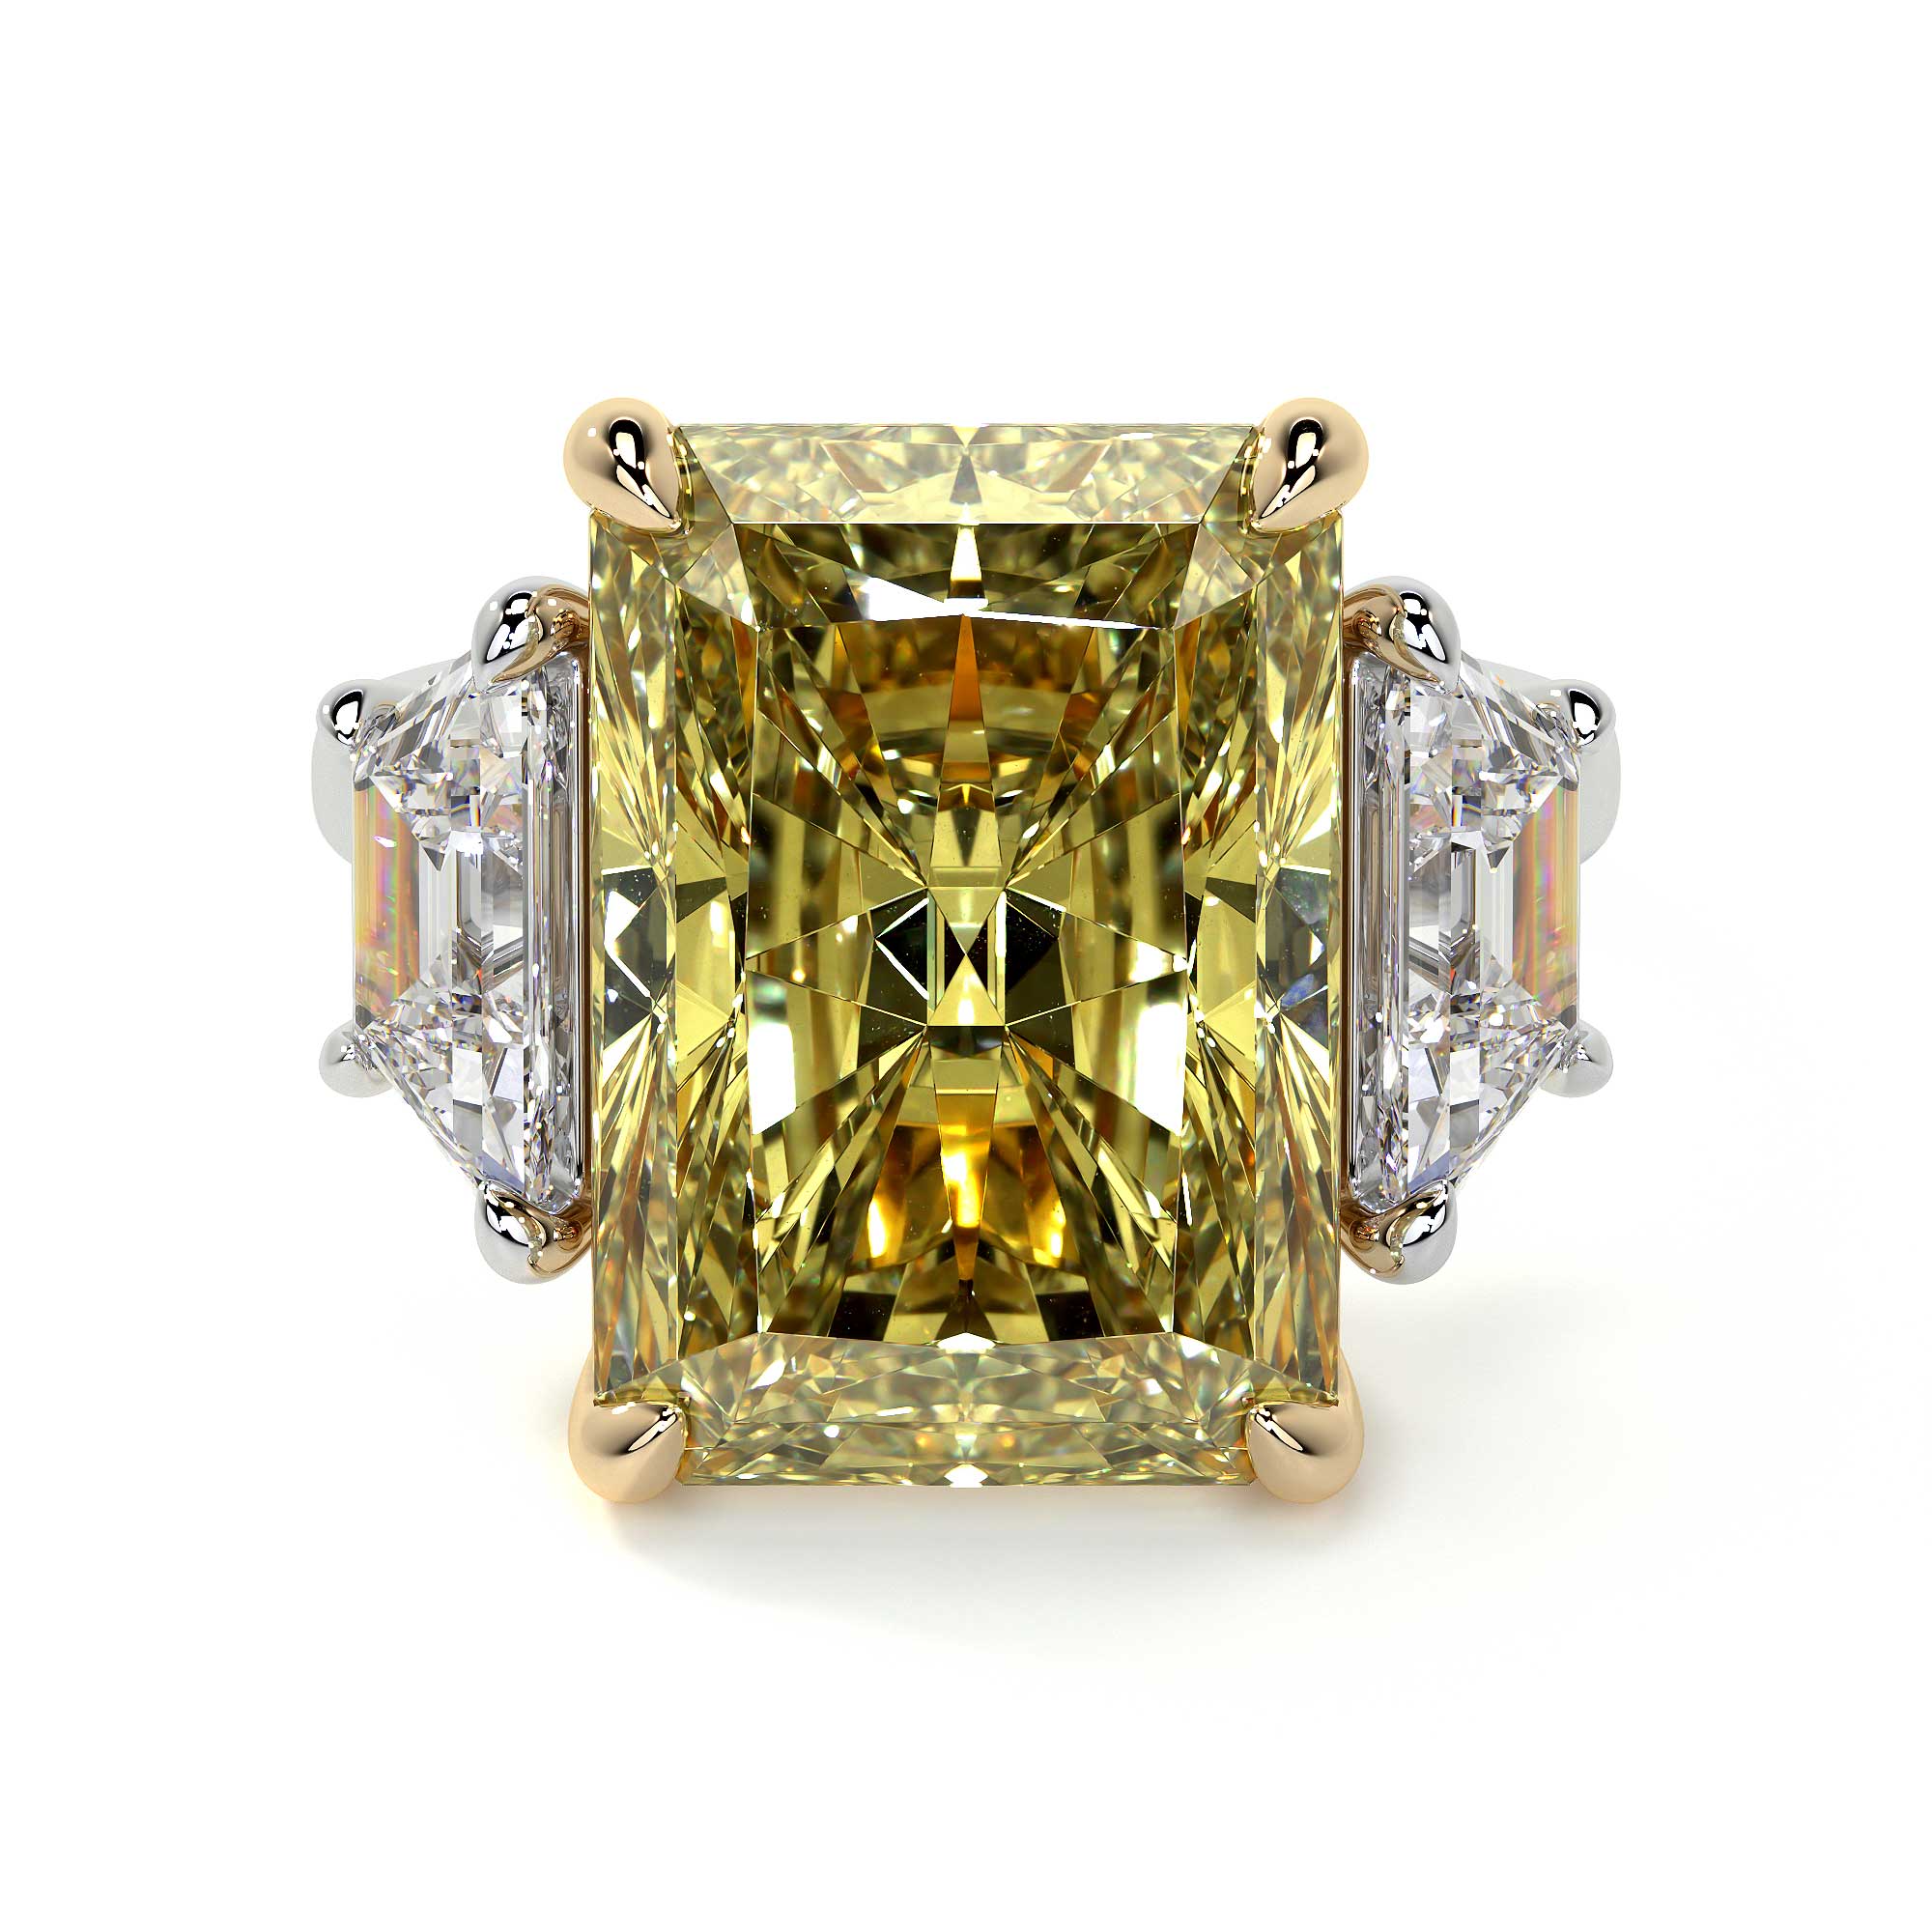 Fancy Intense Yellow Radiant Cut Diamond Ring, 10 Carat